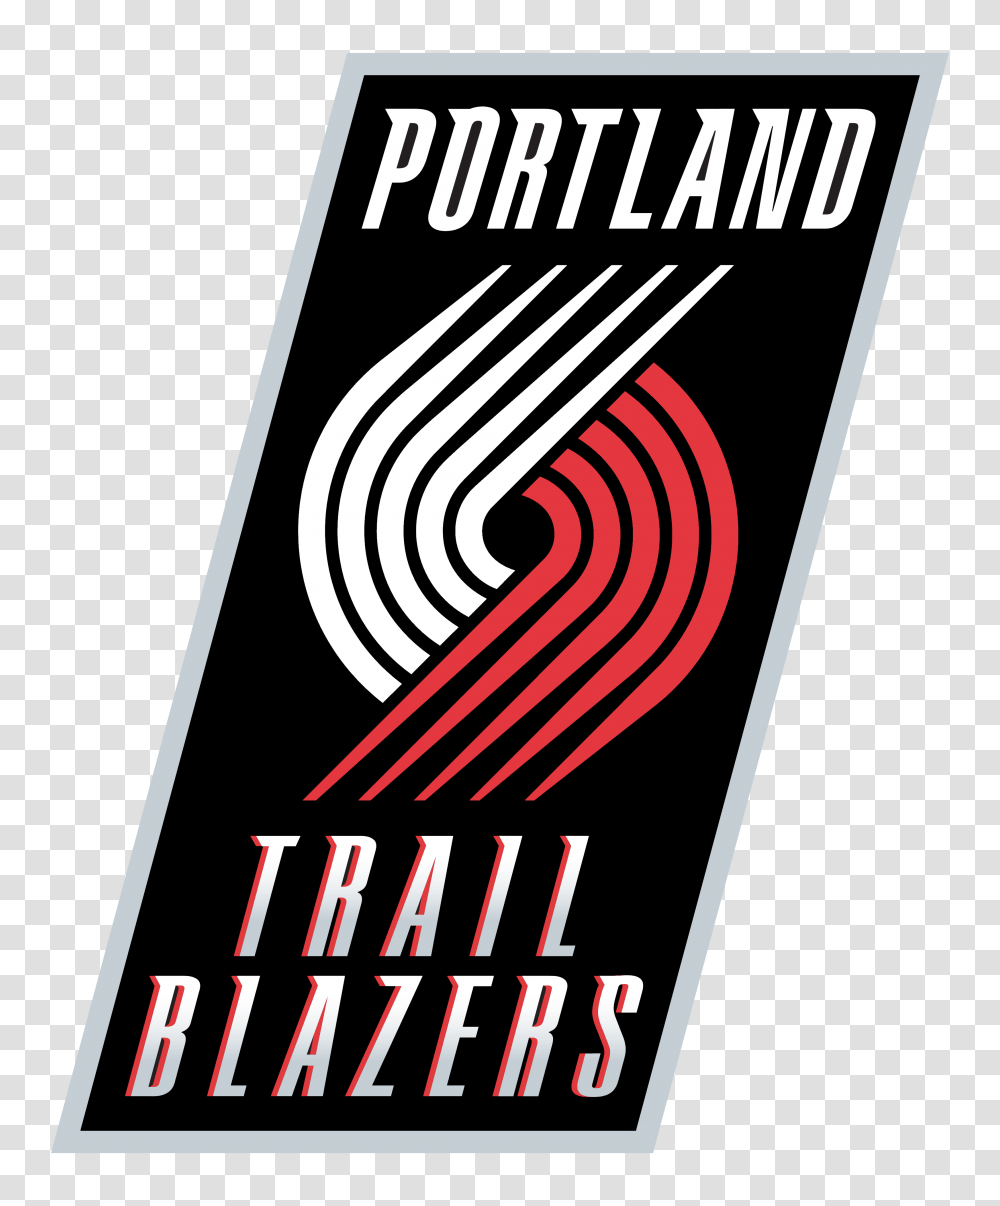 Portland Trail Blazers Logos Download, Advertisement, Poster Transparent Png